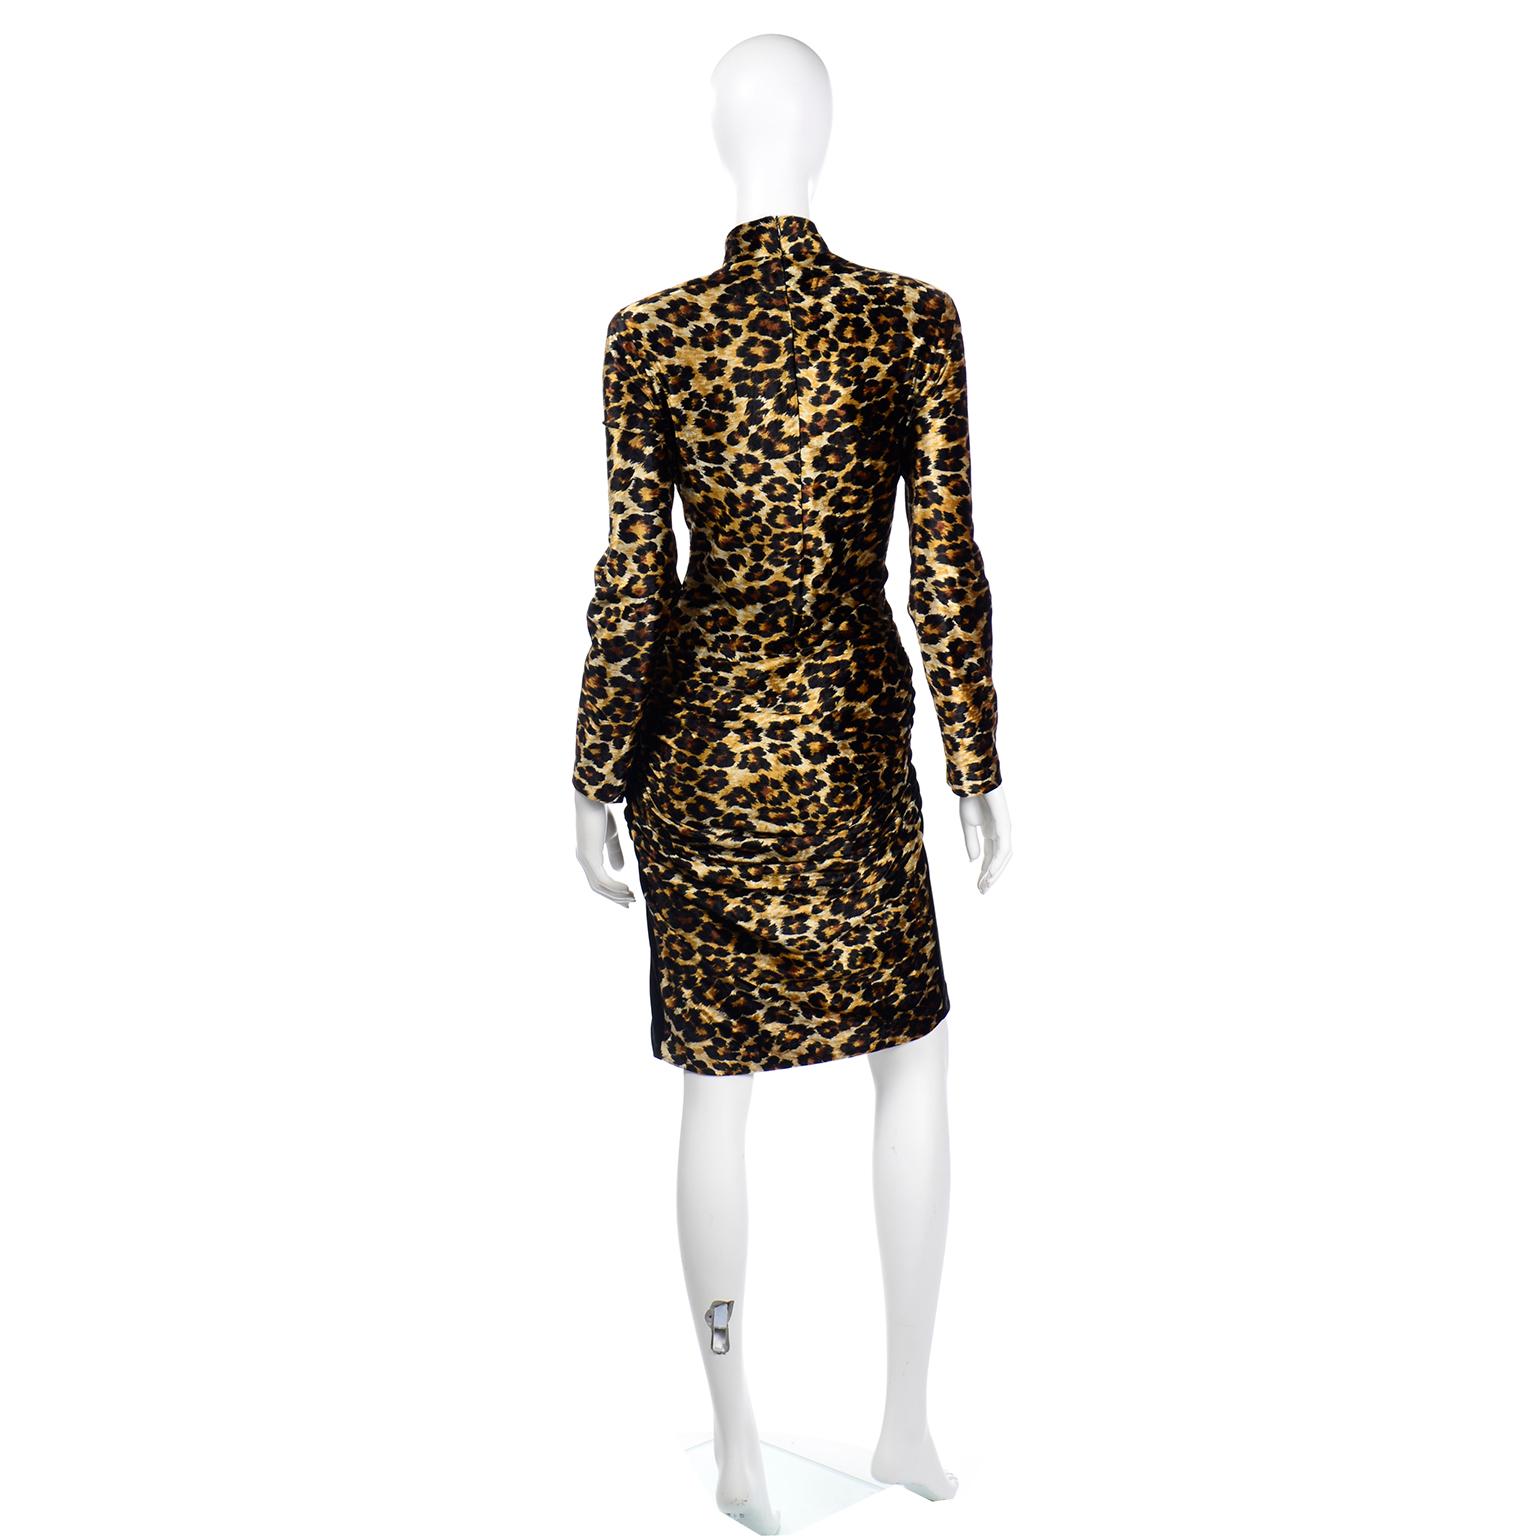 Women's Fall Winter 1988/89 Patrick Kelly Vintage Leopard Print Bodycon Runway Dress For Sale